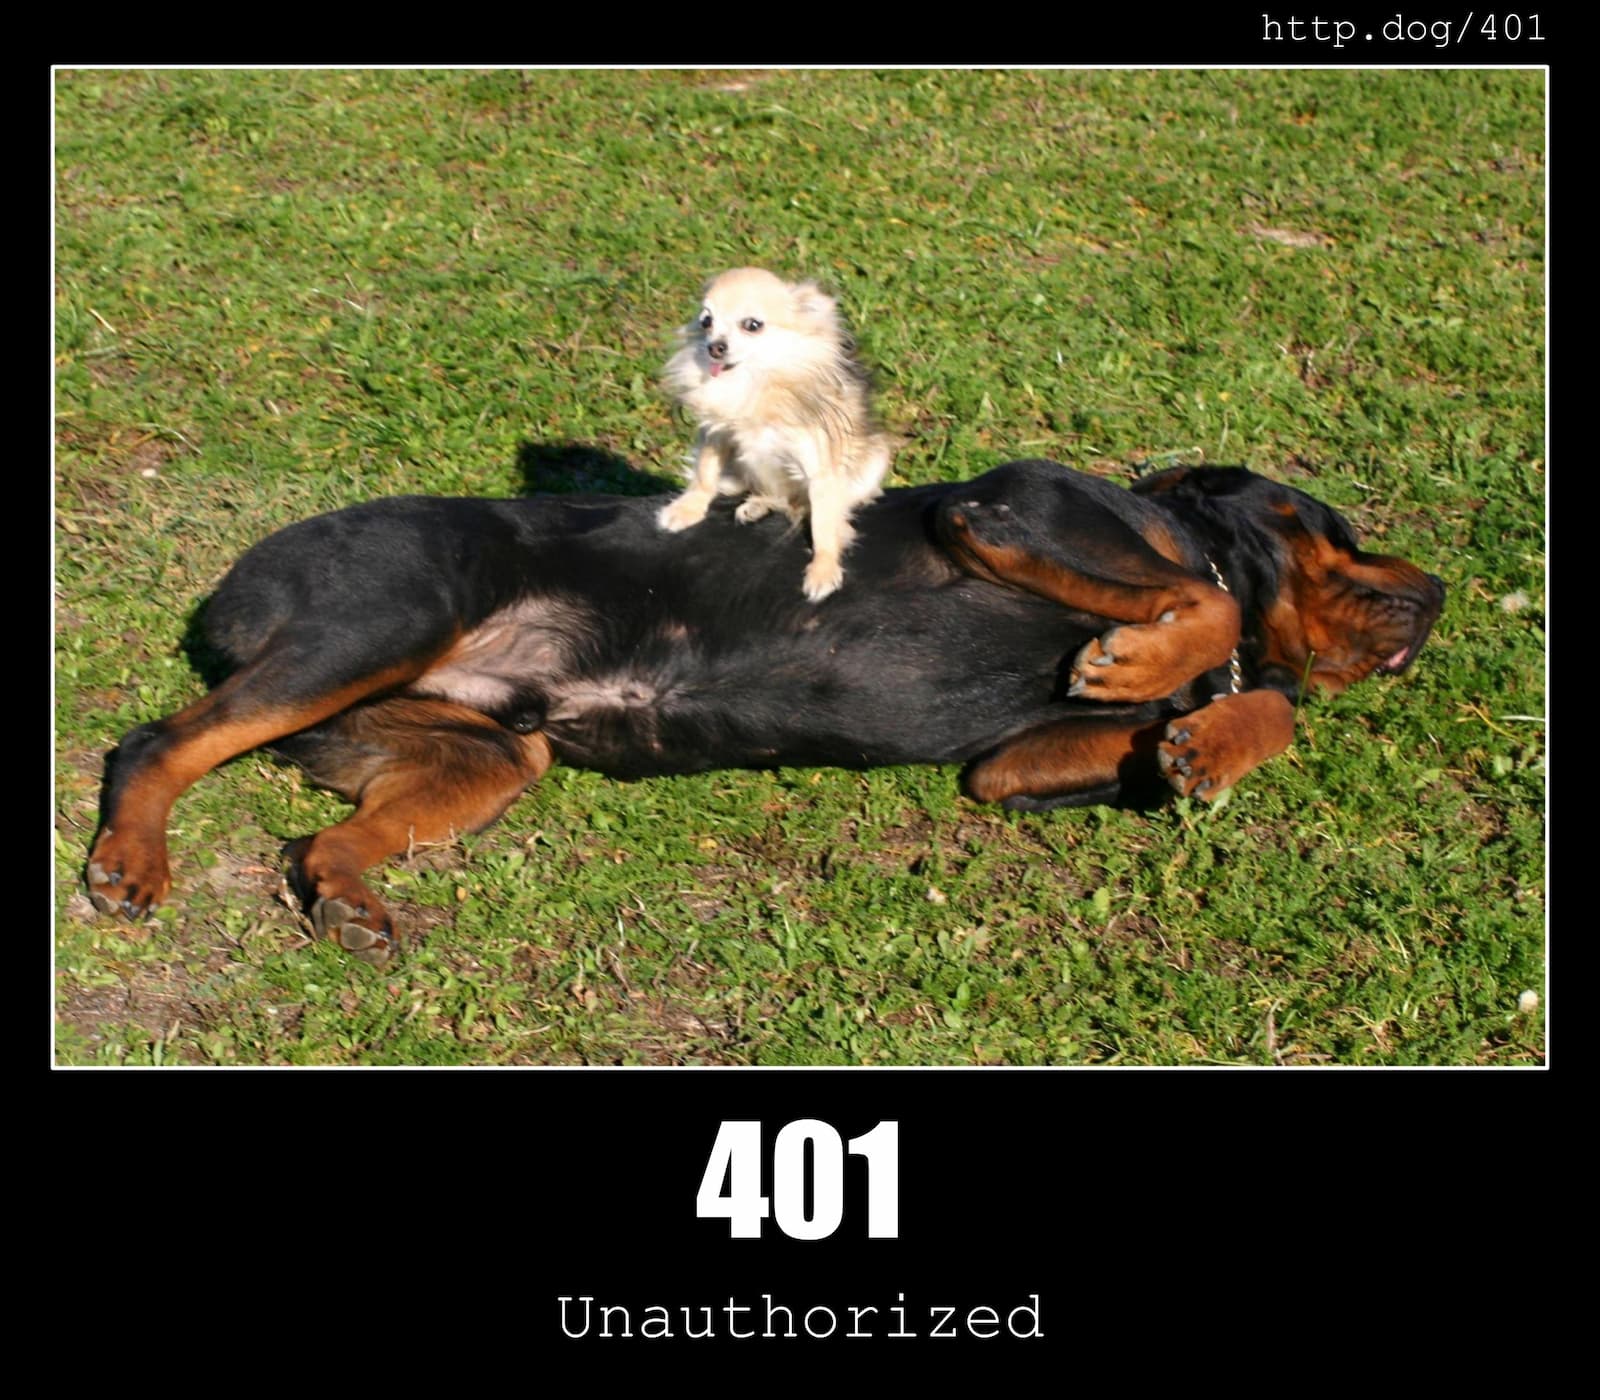 HTTP Status Code 401 Unauthorized & Dogs